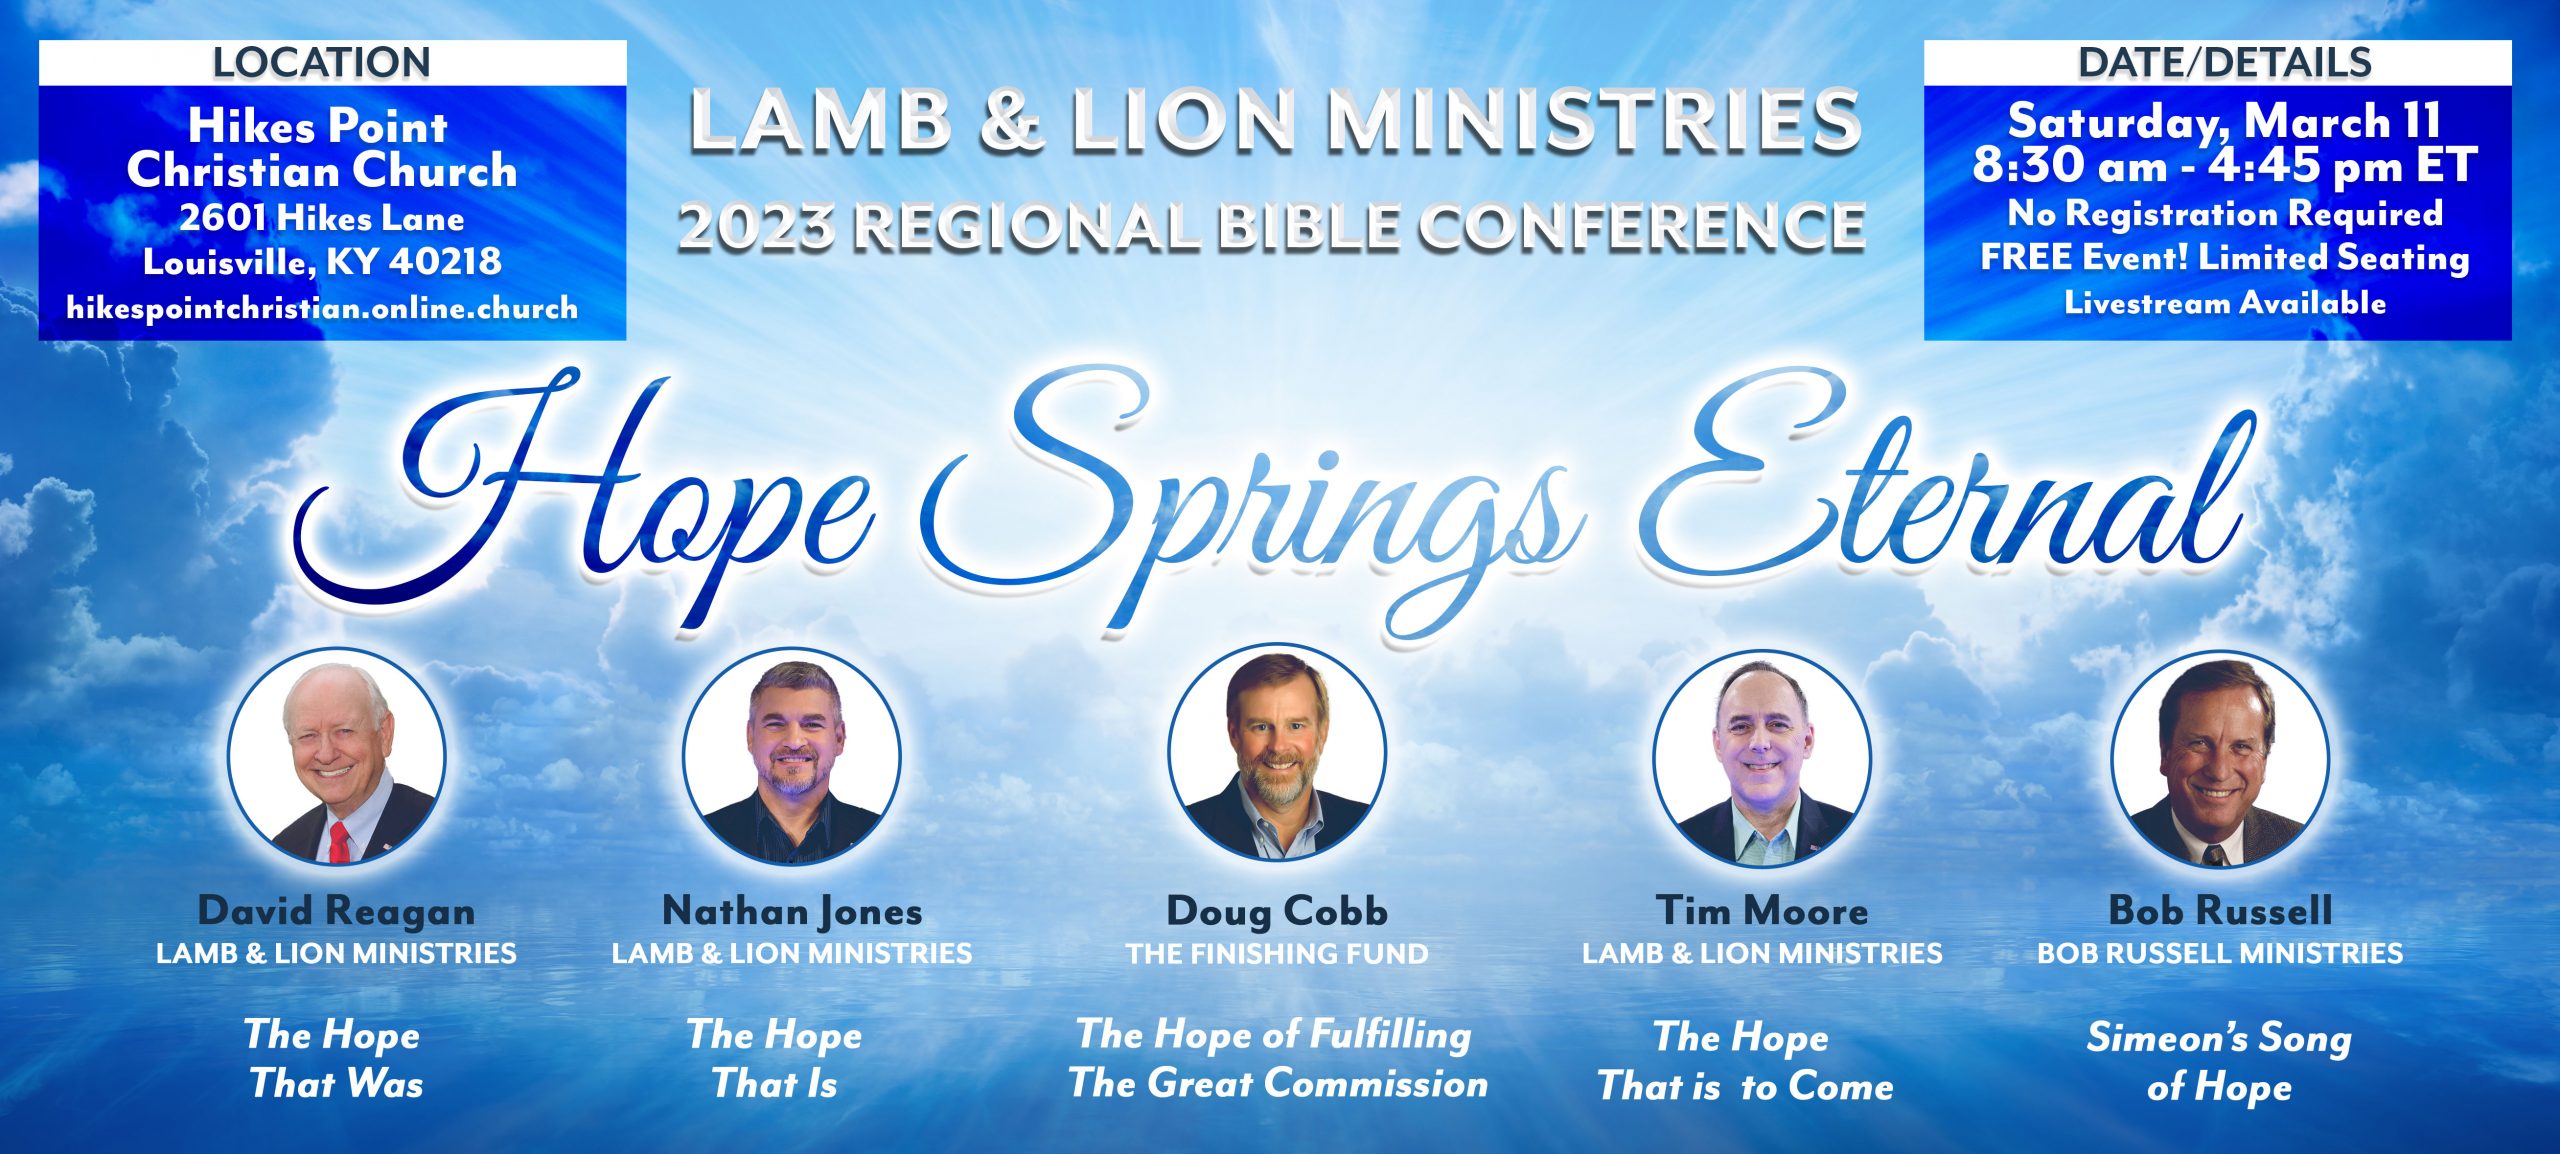 Lamb & Lion Ministries Regional Bible Conference | Mar 11, 2023